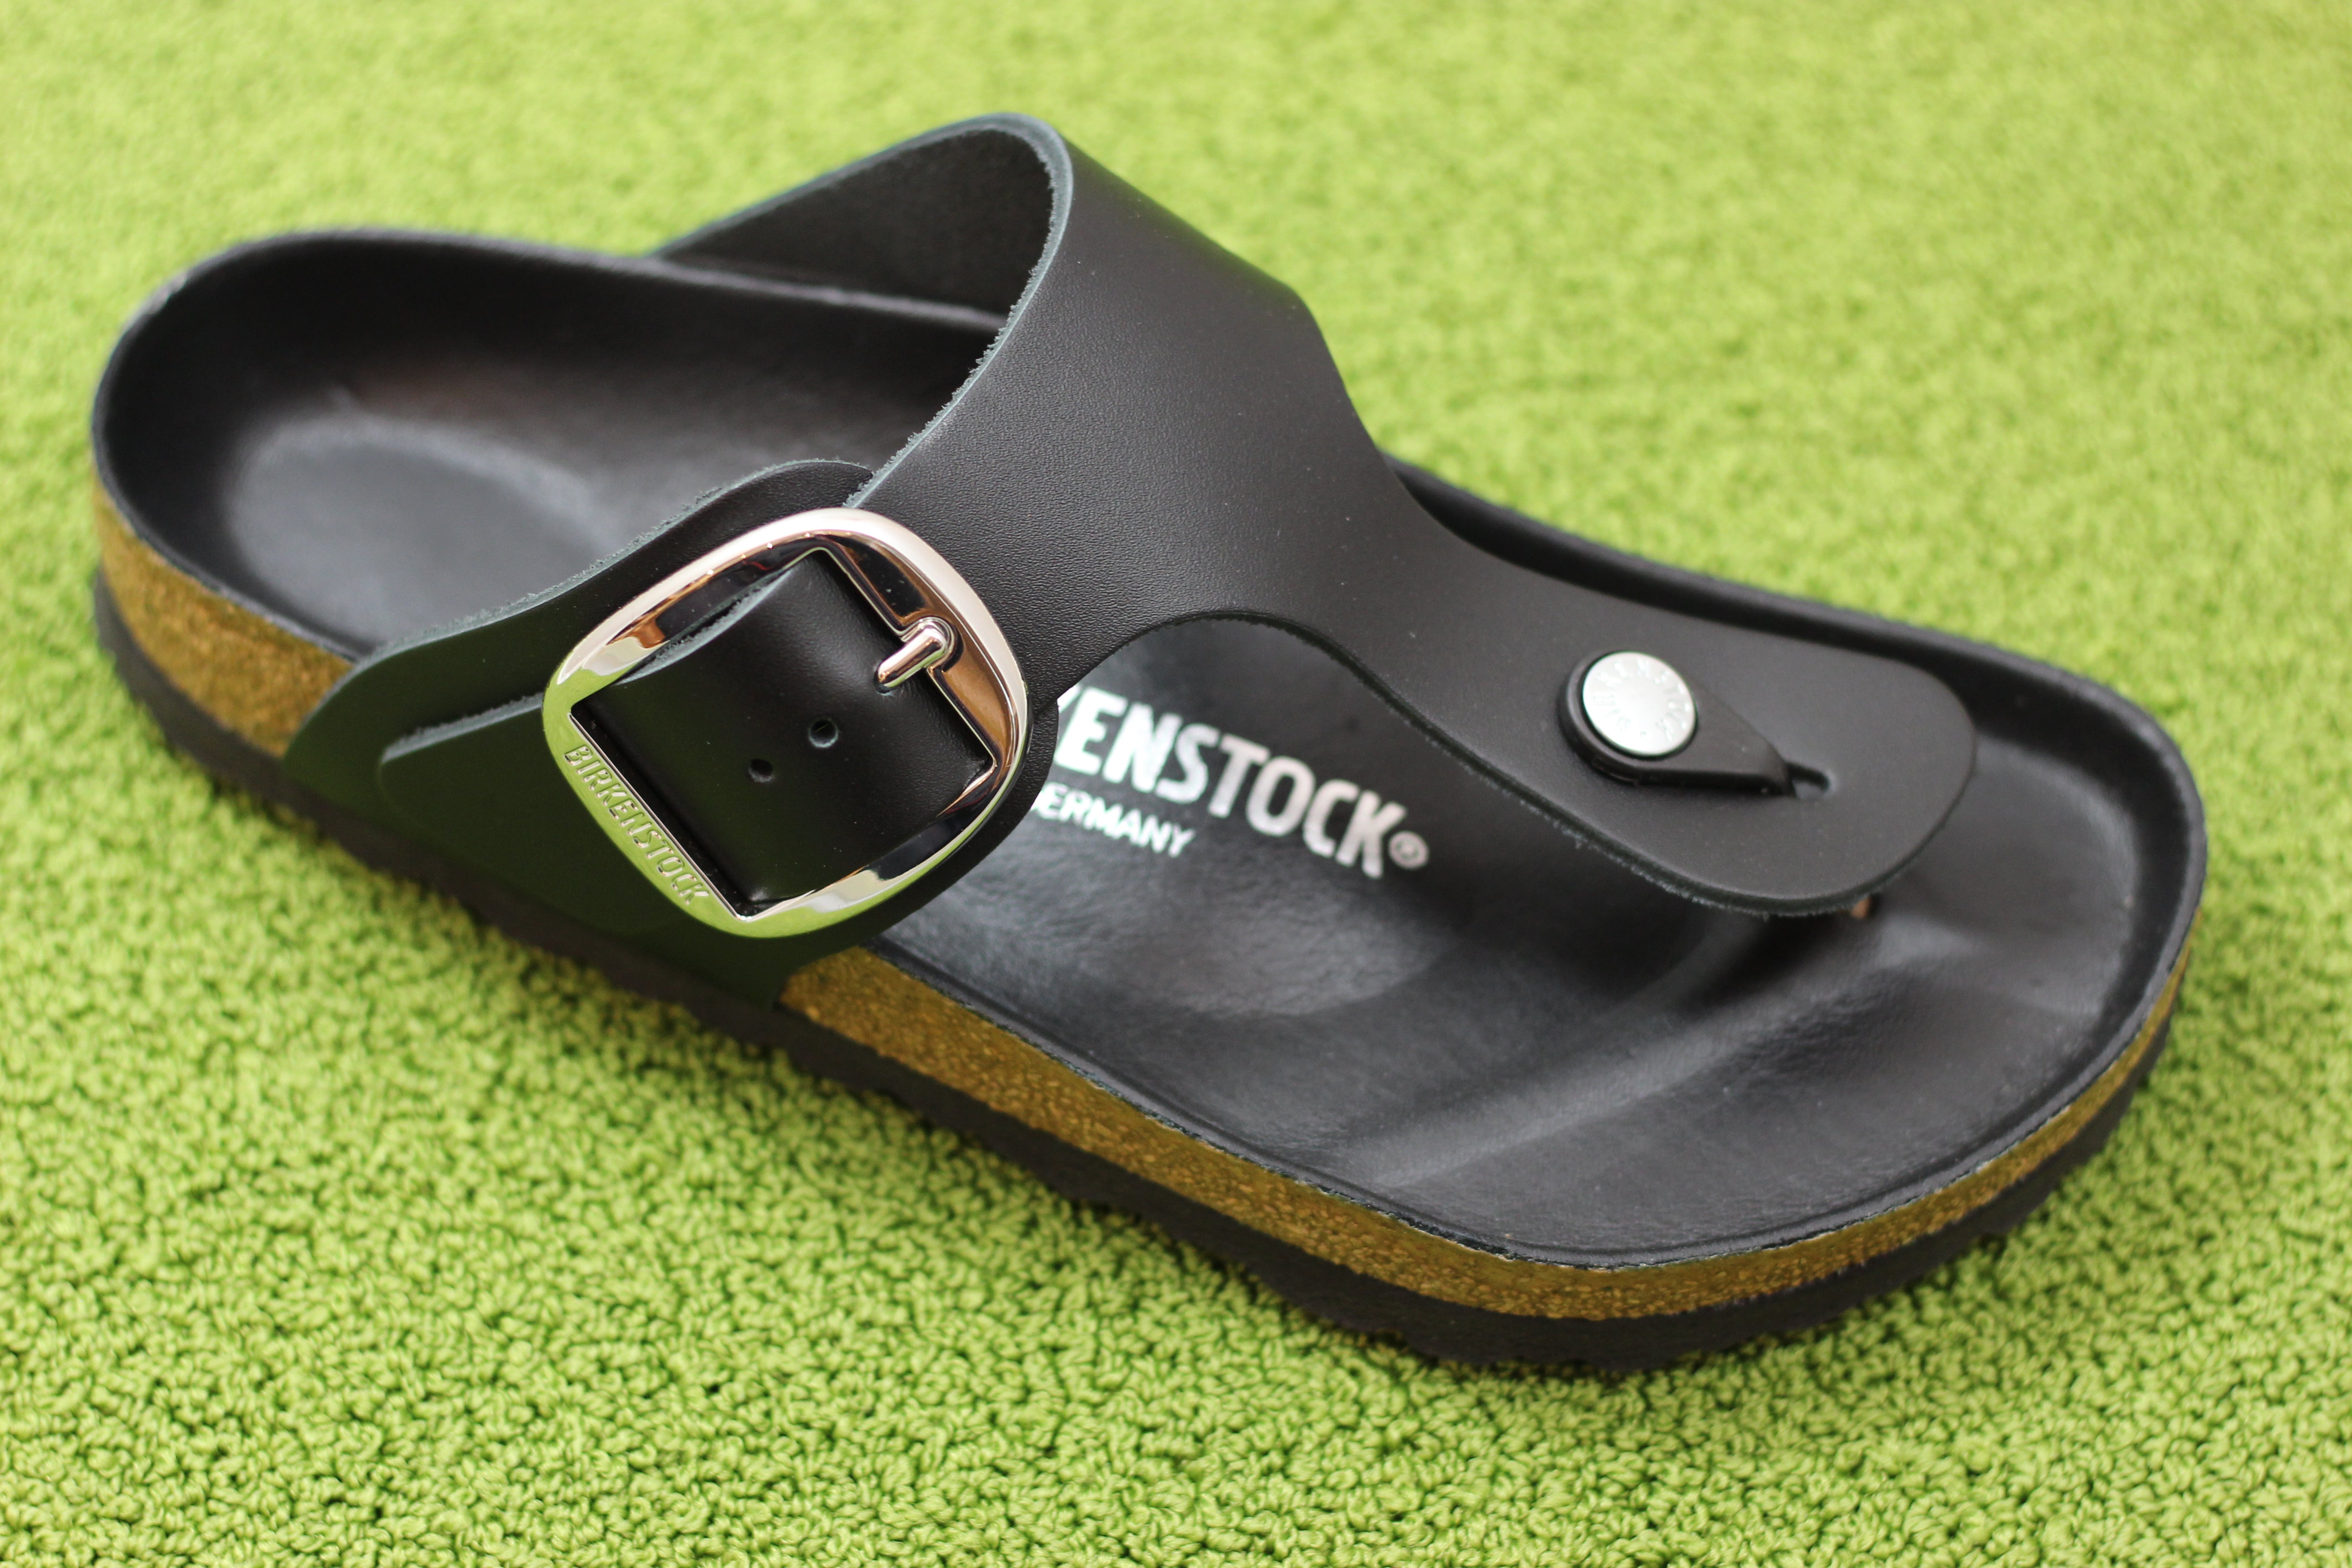 Birkenstock Sandal: Gizeh Black